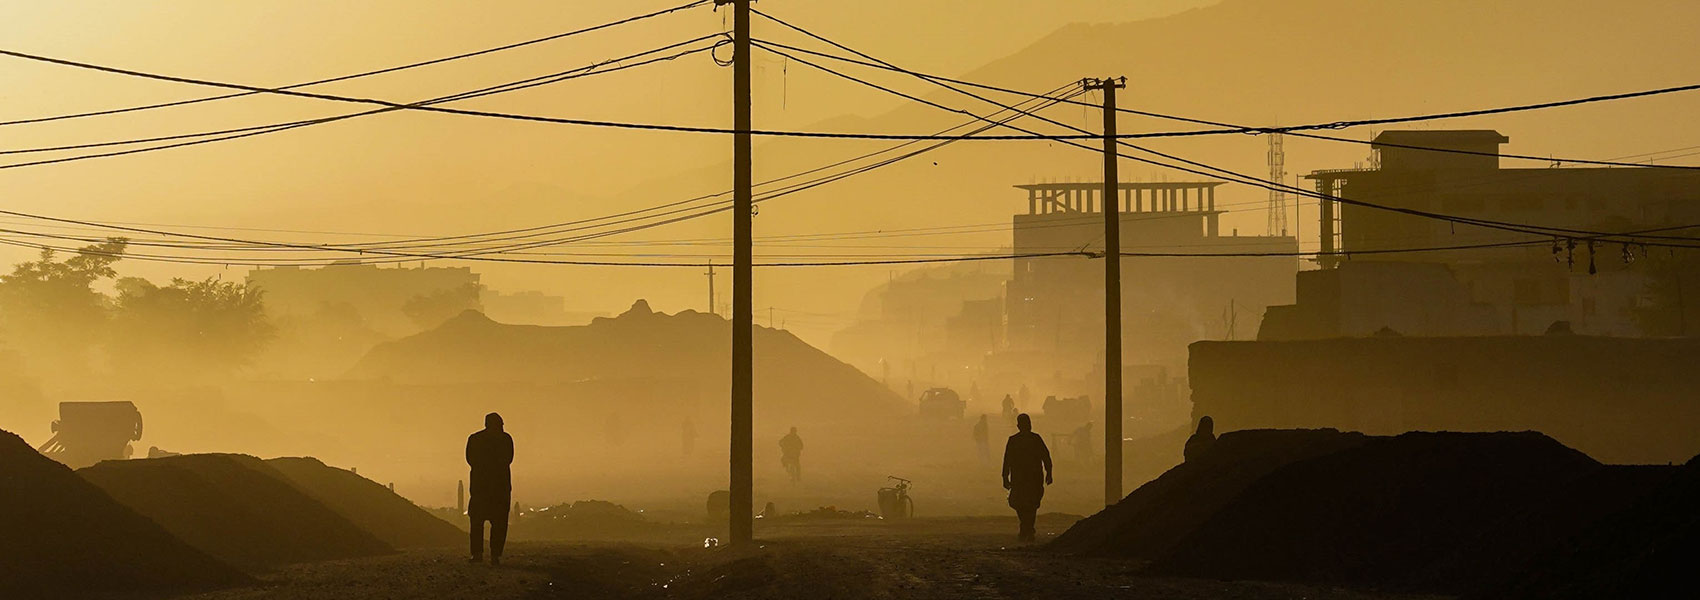 Dark figures walk through a city in Afghanistan 